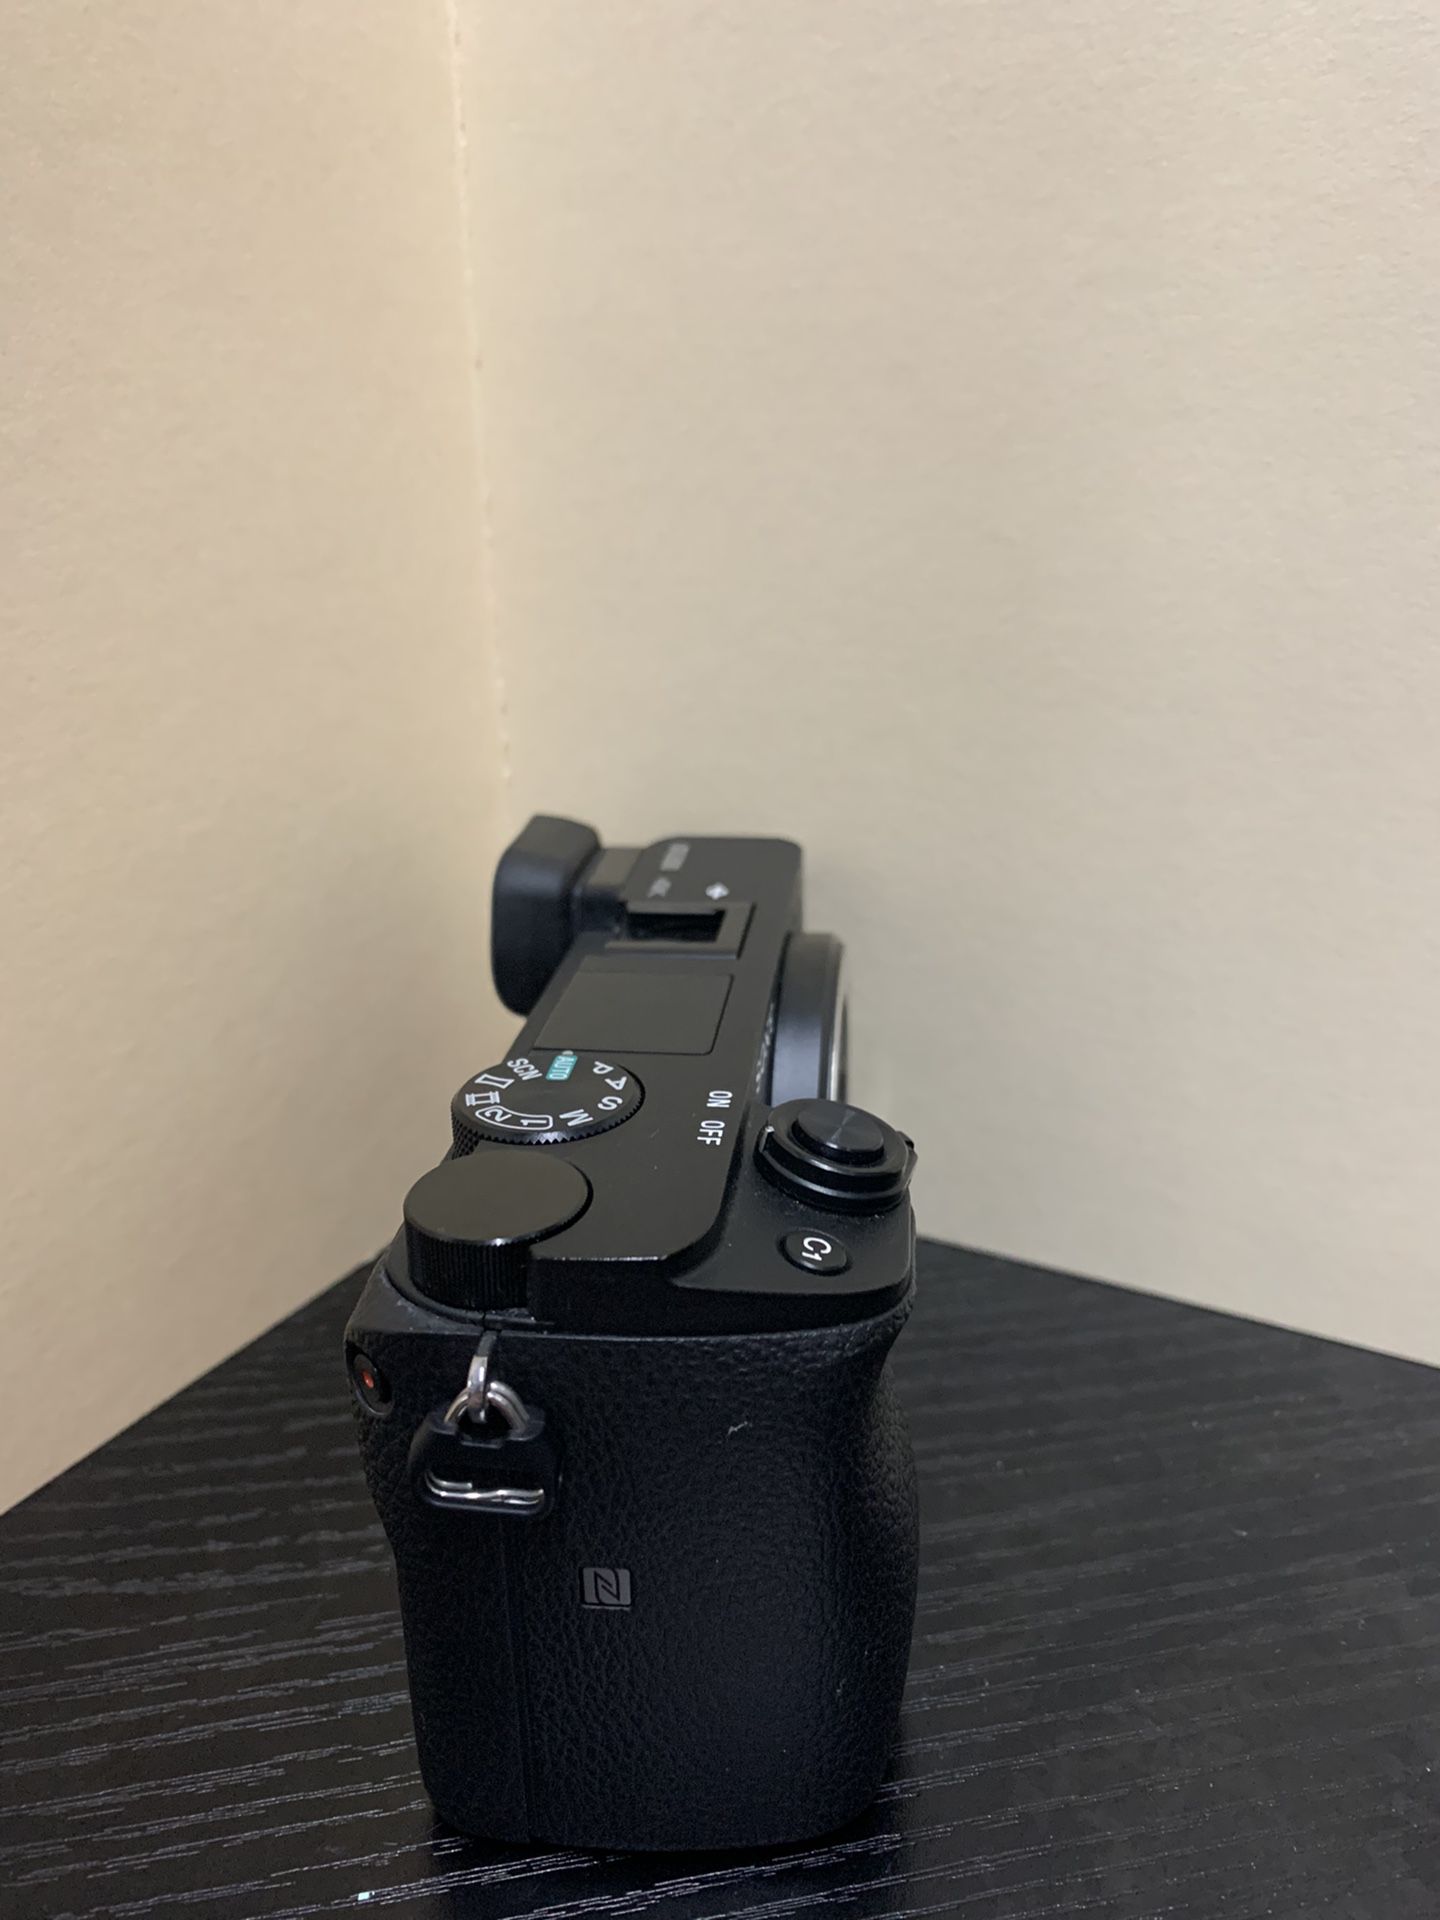 Sony Alpha a6300 Mirrorless Camera